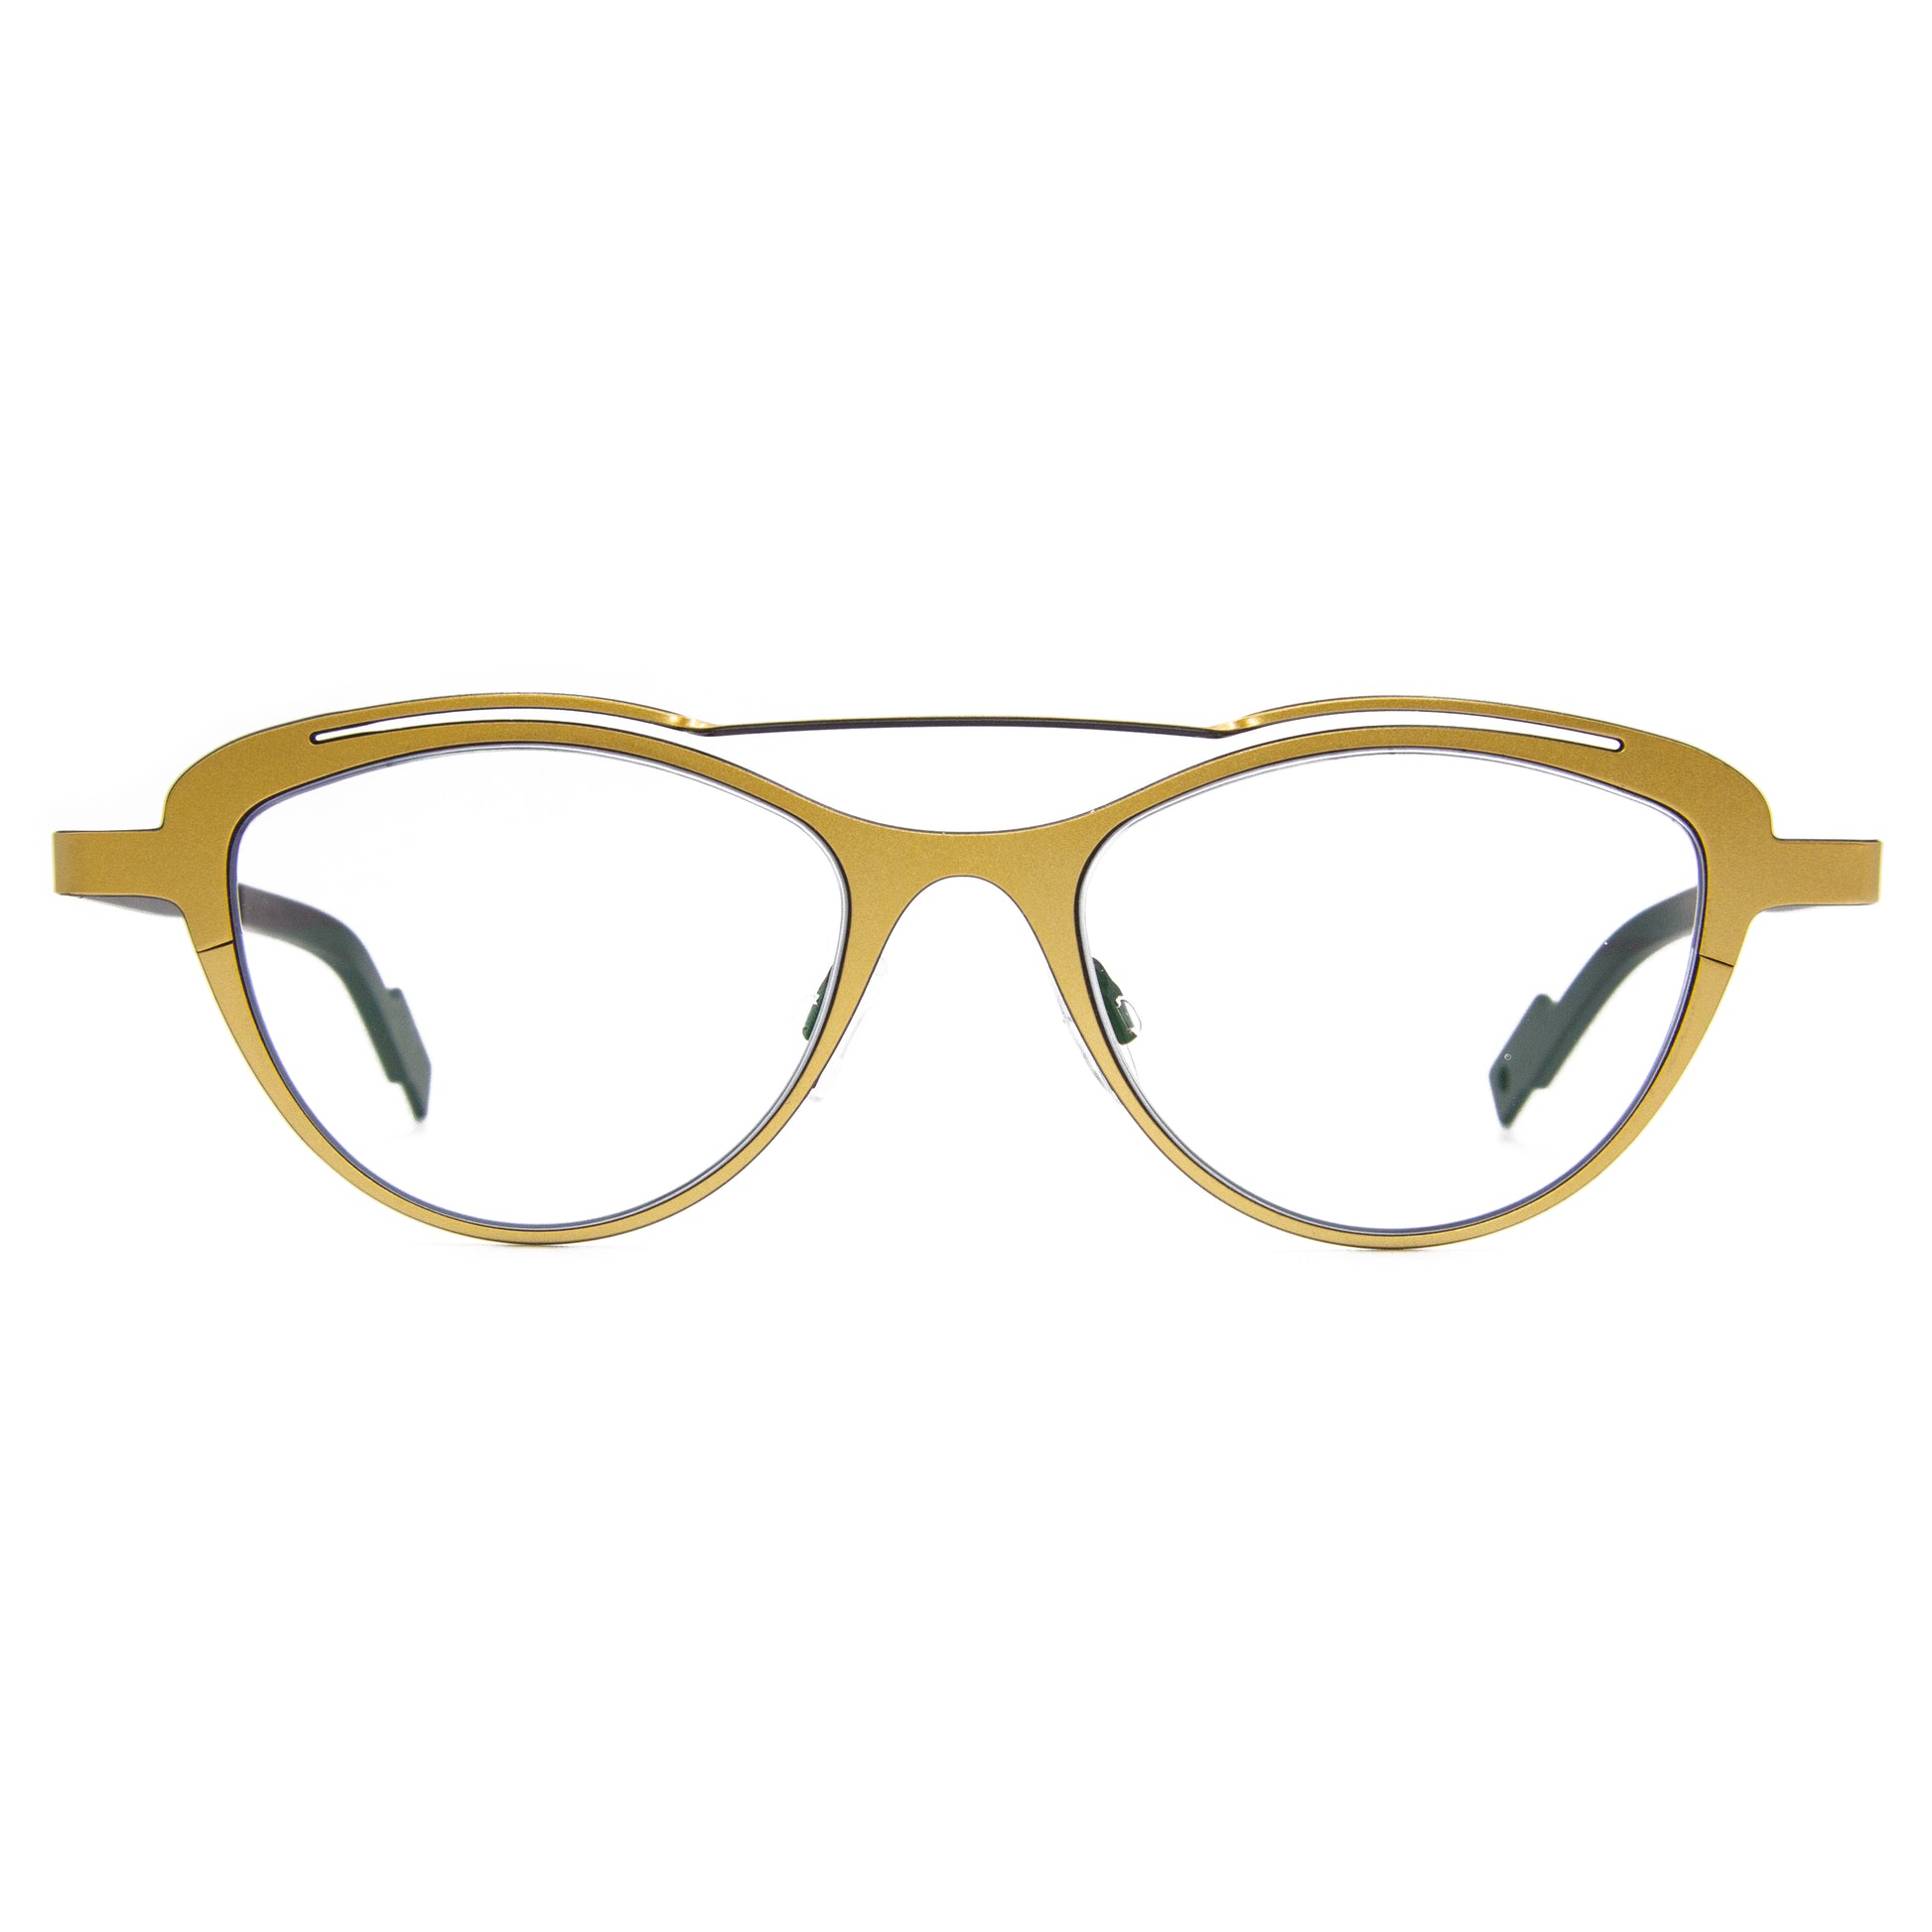 Theo - Eyewear - Carve - 410 - Glasses